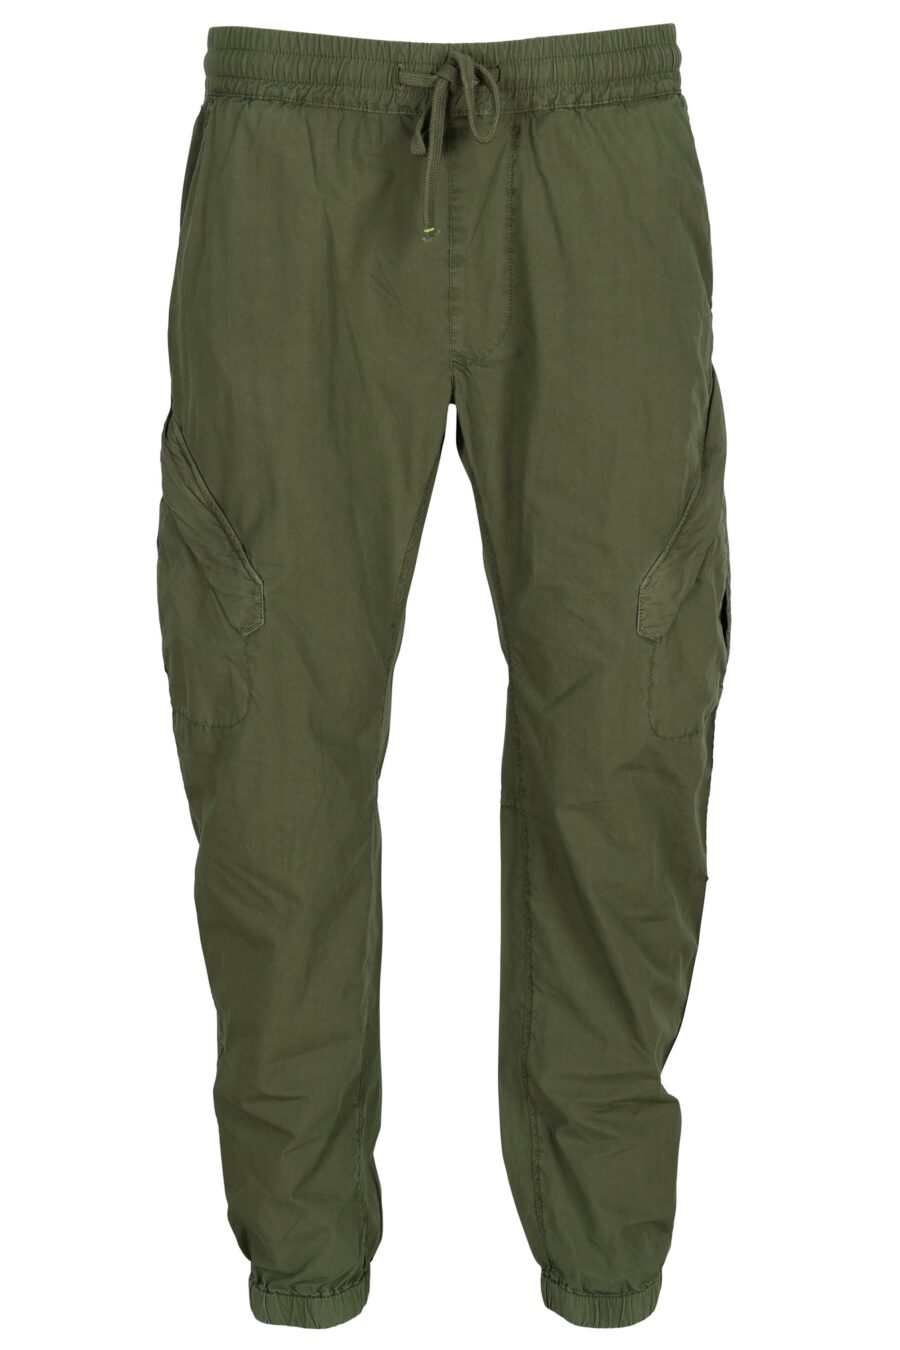 Pantalon cargo vert militaire avec ressort - 8058610767143